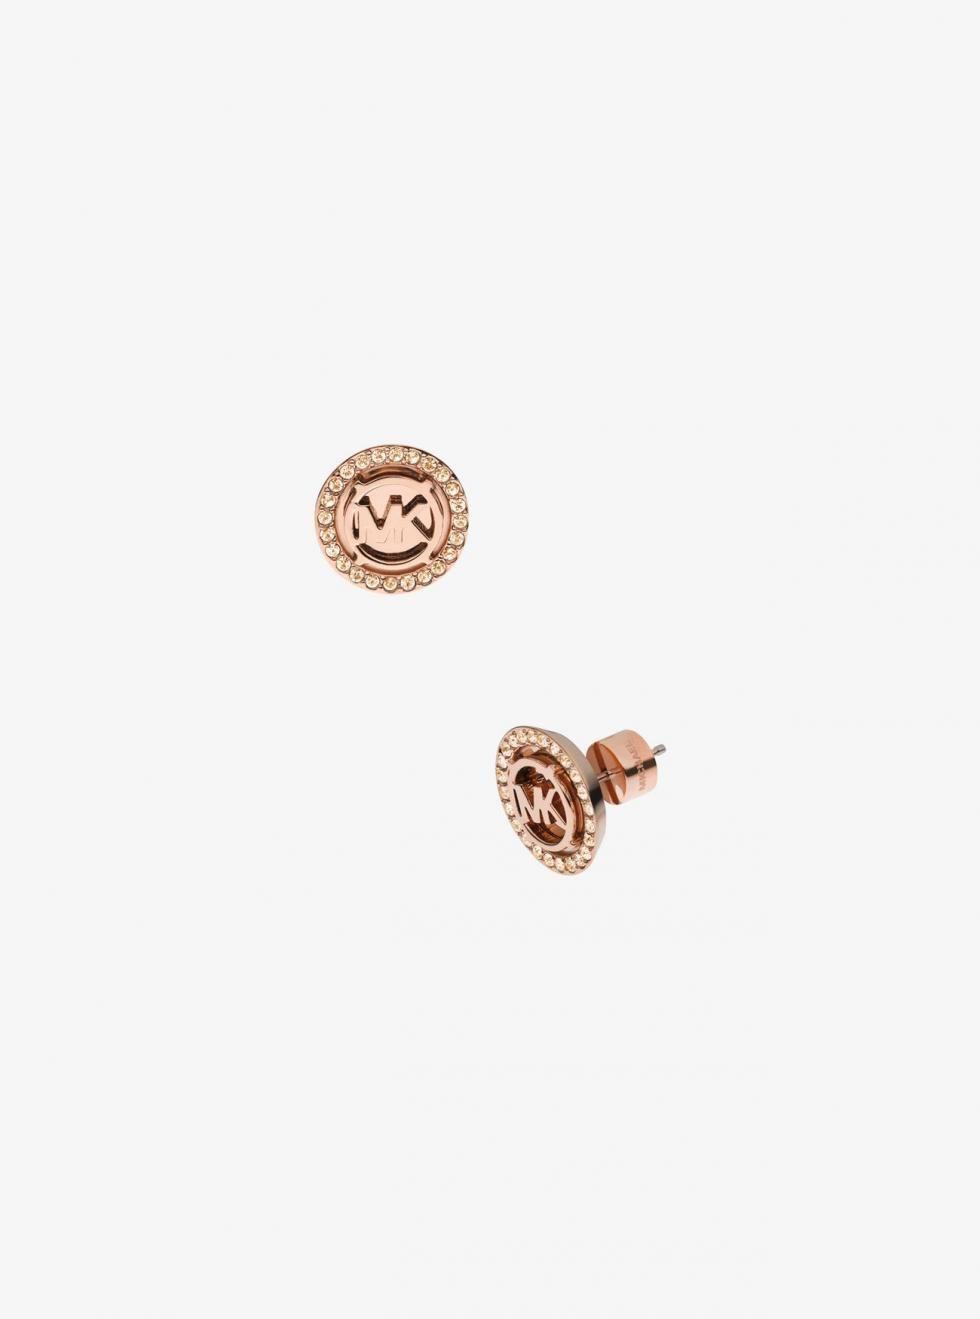 Micheal Kors Logo - Michael Kors Rose Gold Tone Stud Earrings Womens Earrings